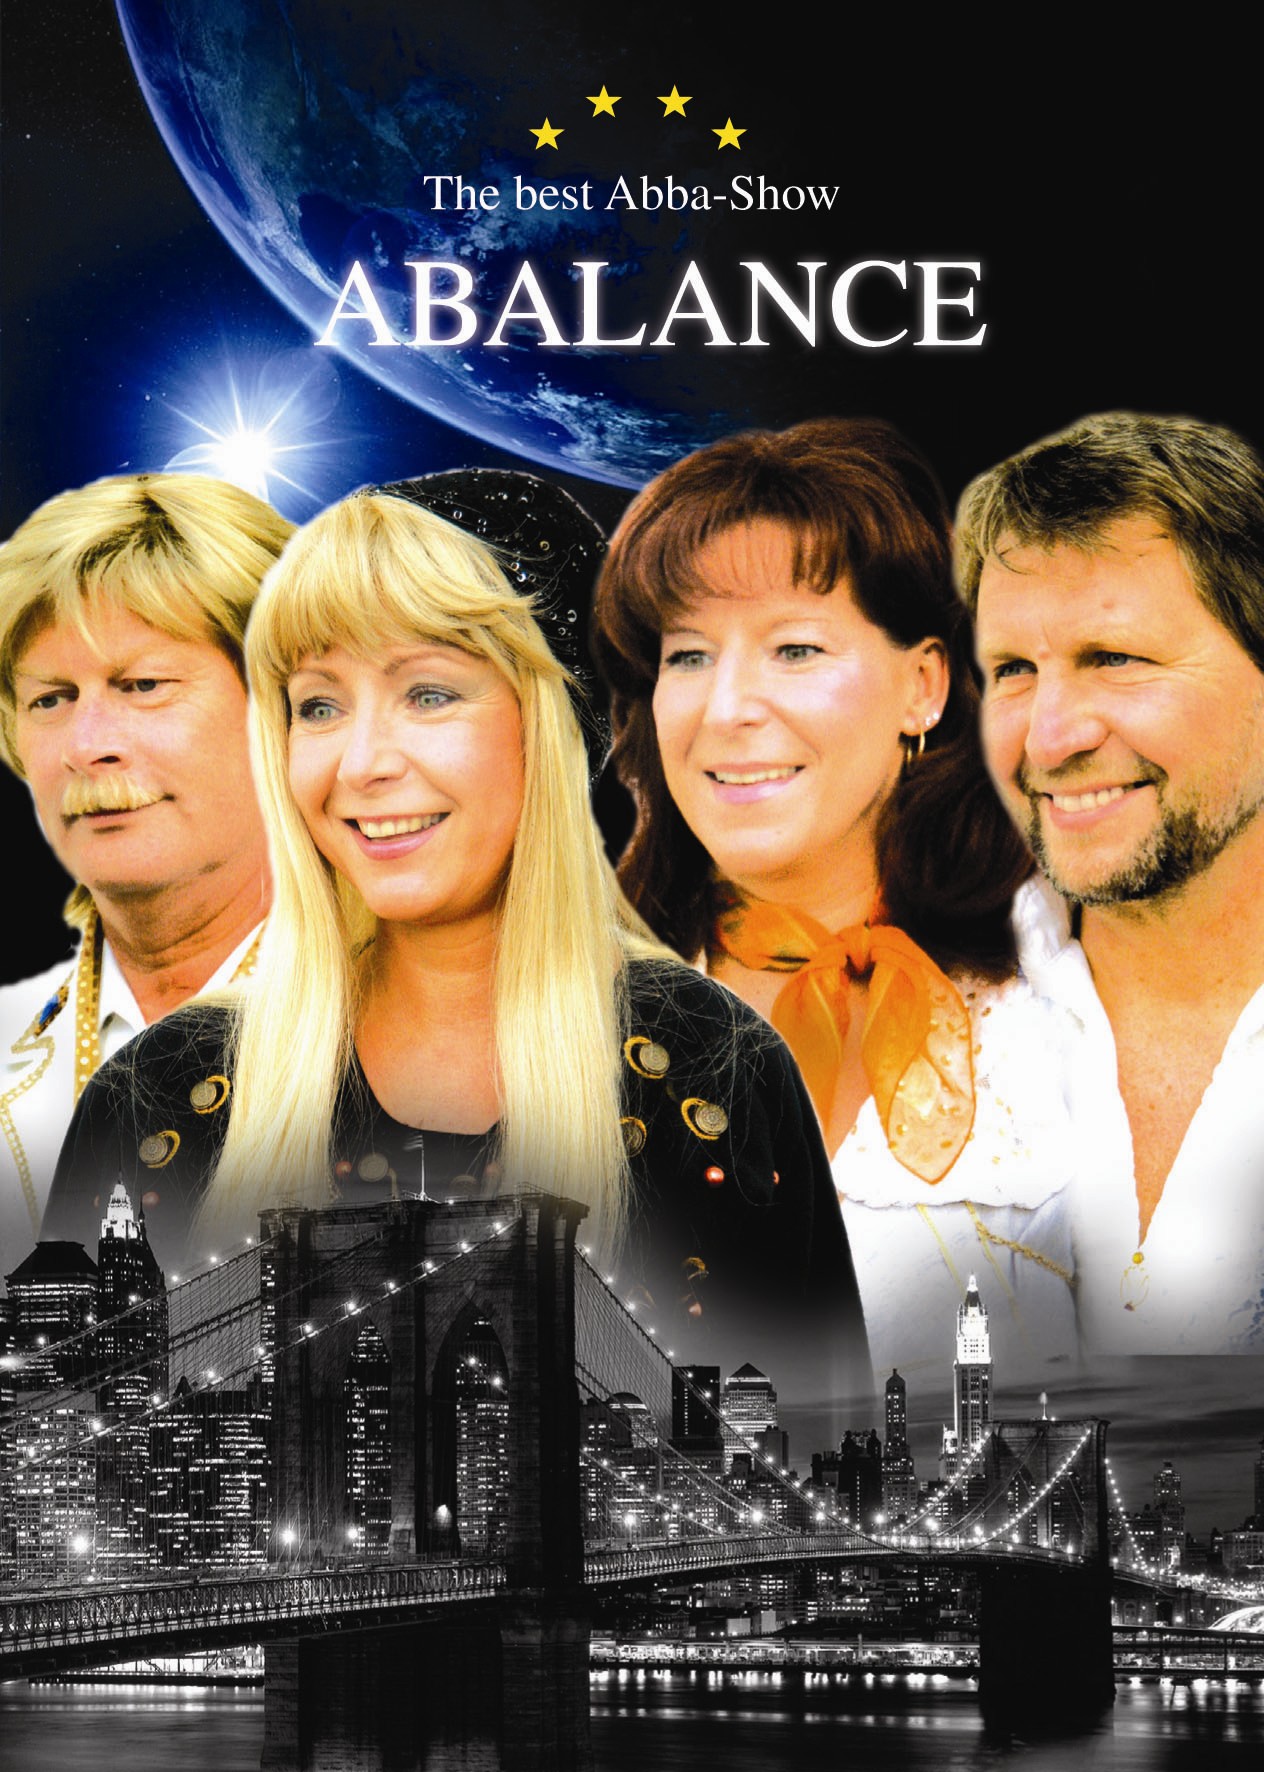 Abalance - The ABBA Show